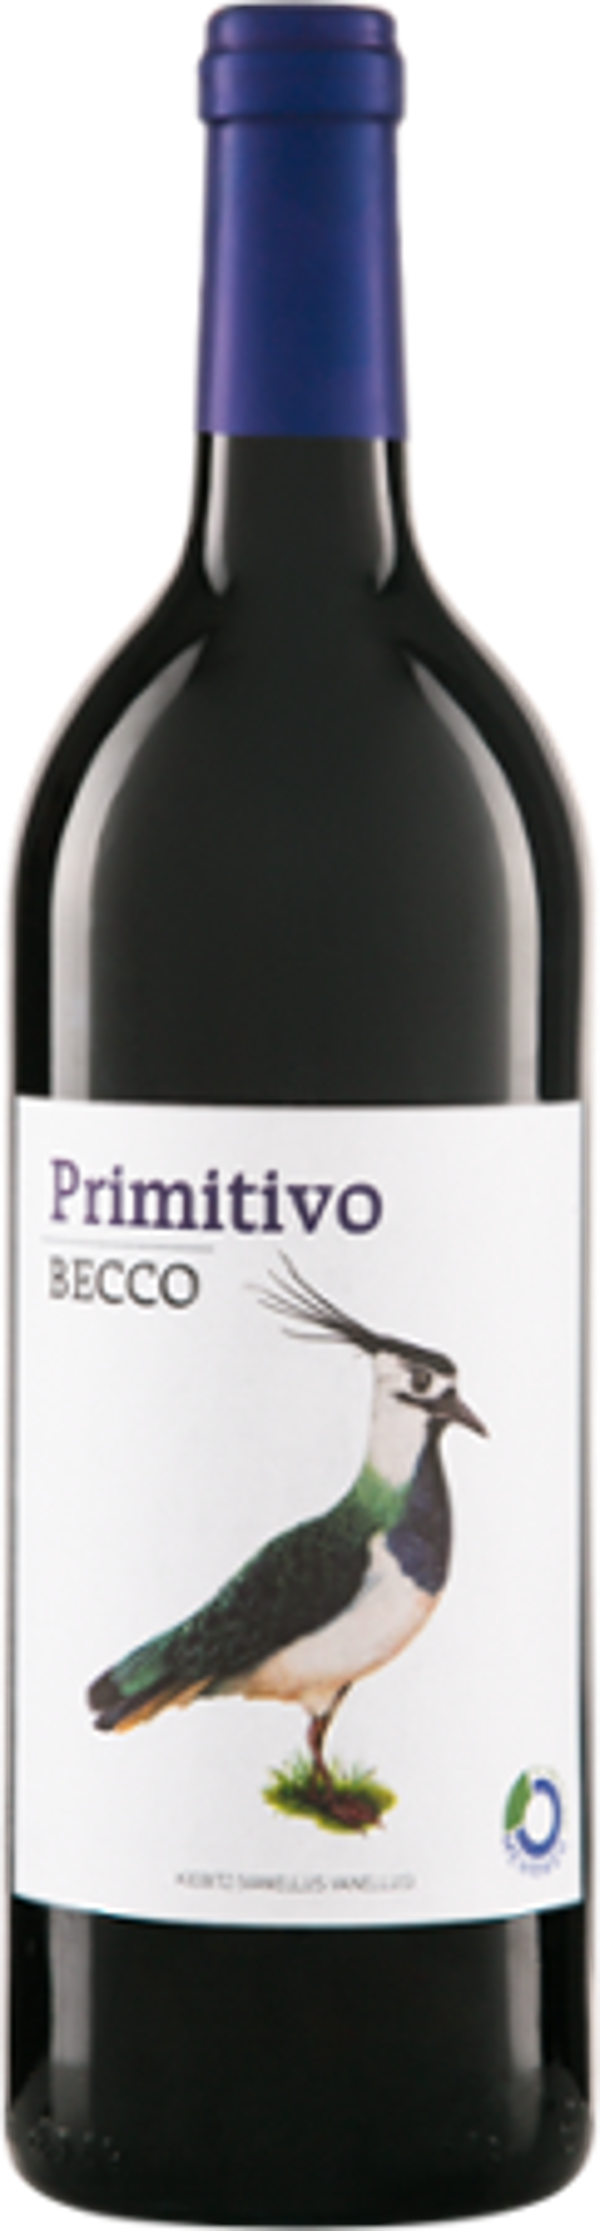 Produktfoto zu BECCO Primitivo IGT Puglia, trocken - 1l Mehrweg